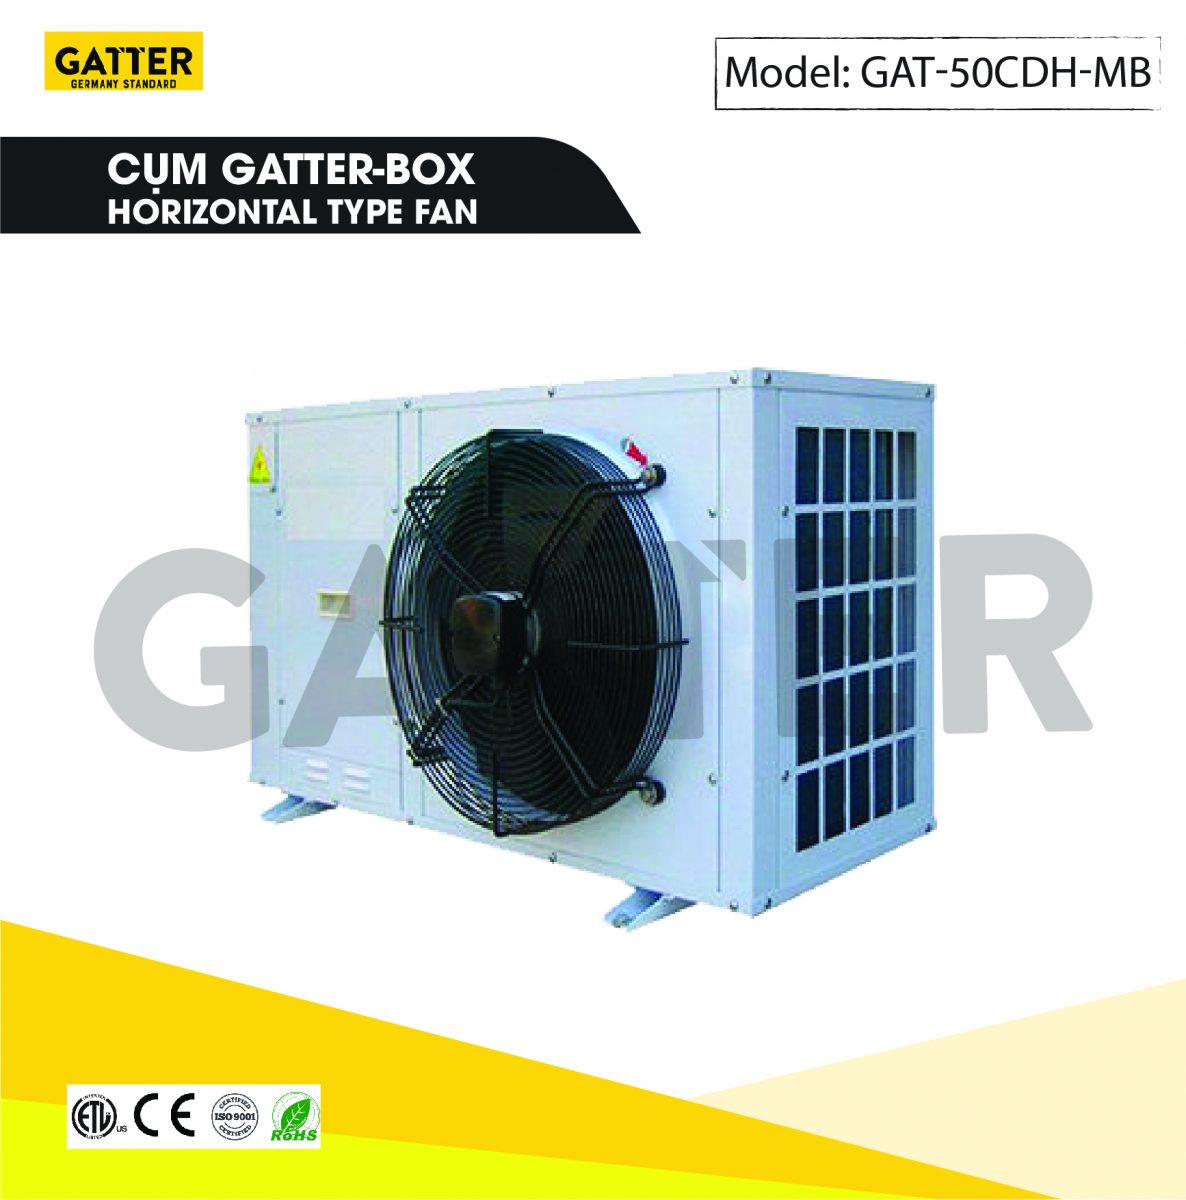 Cụm Gatter-box GAT-50CDH-MB